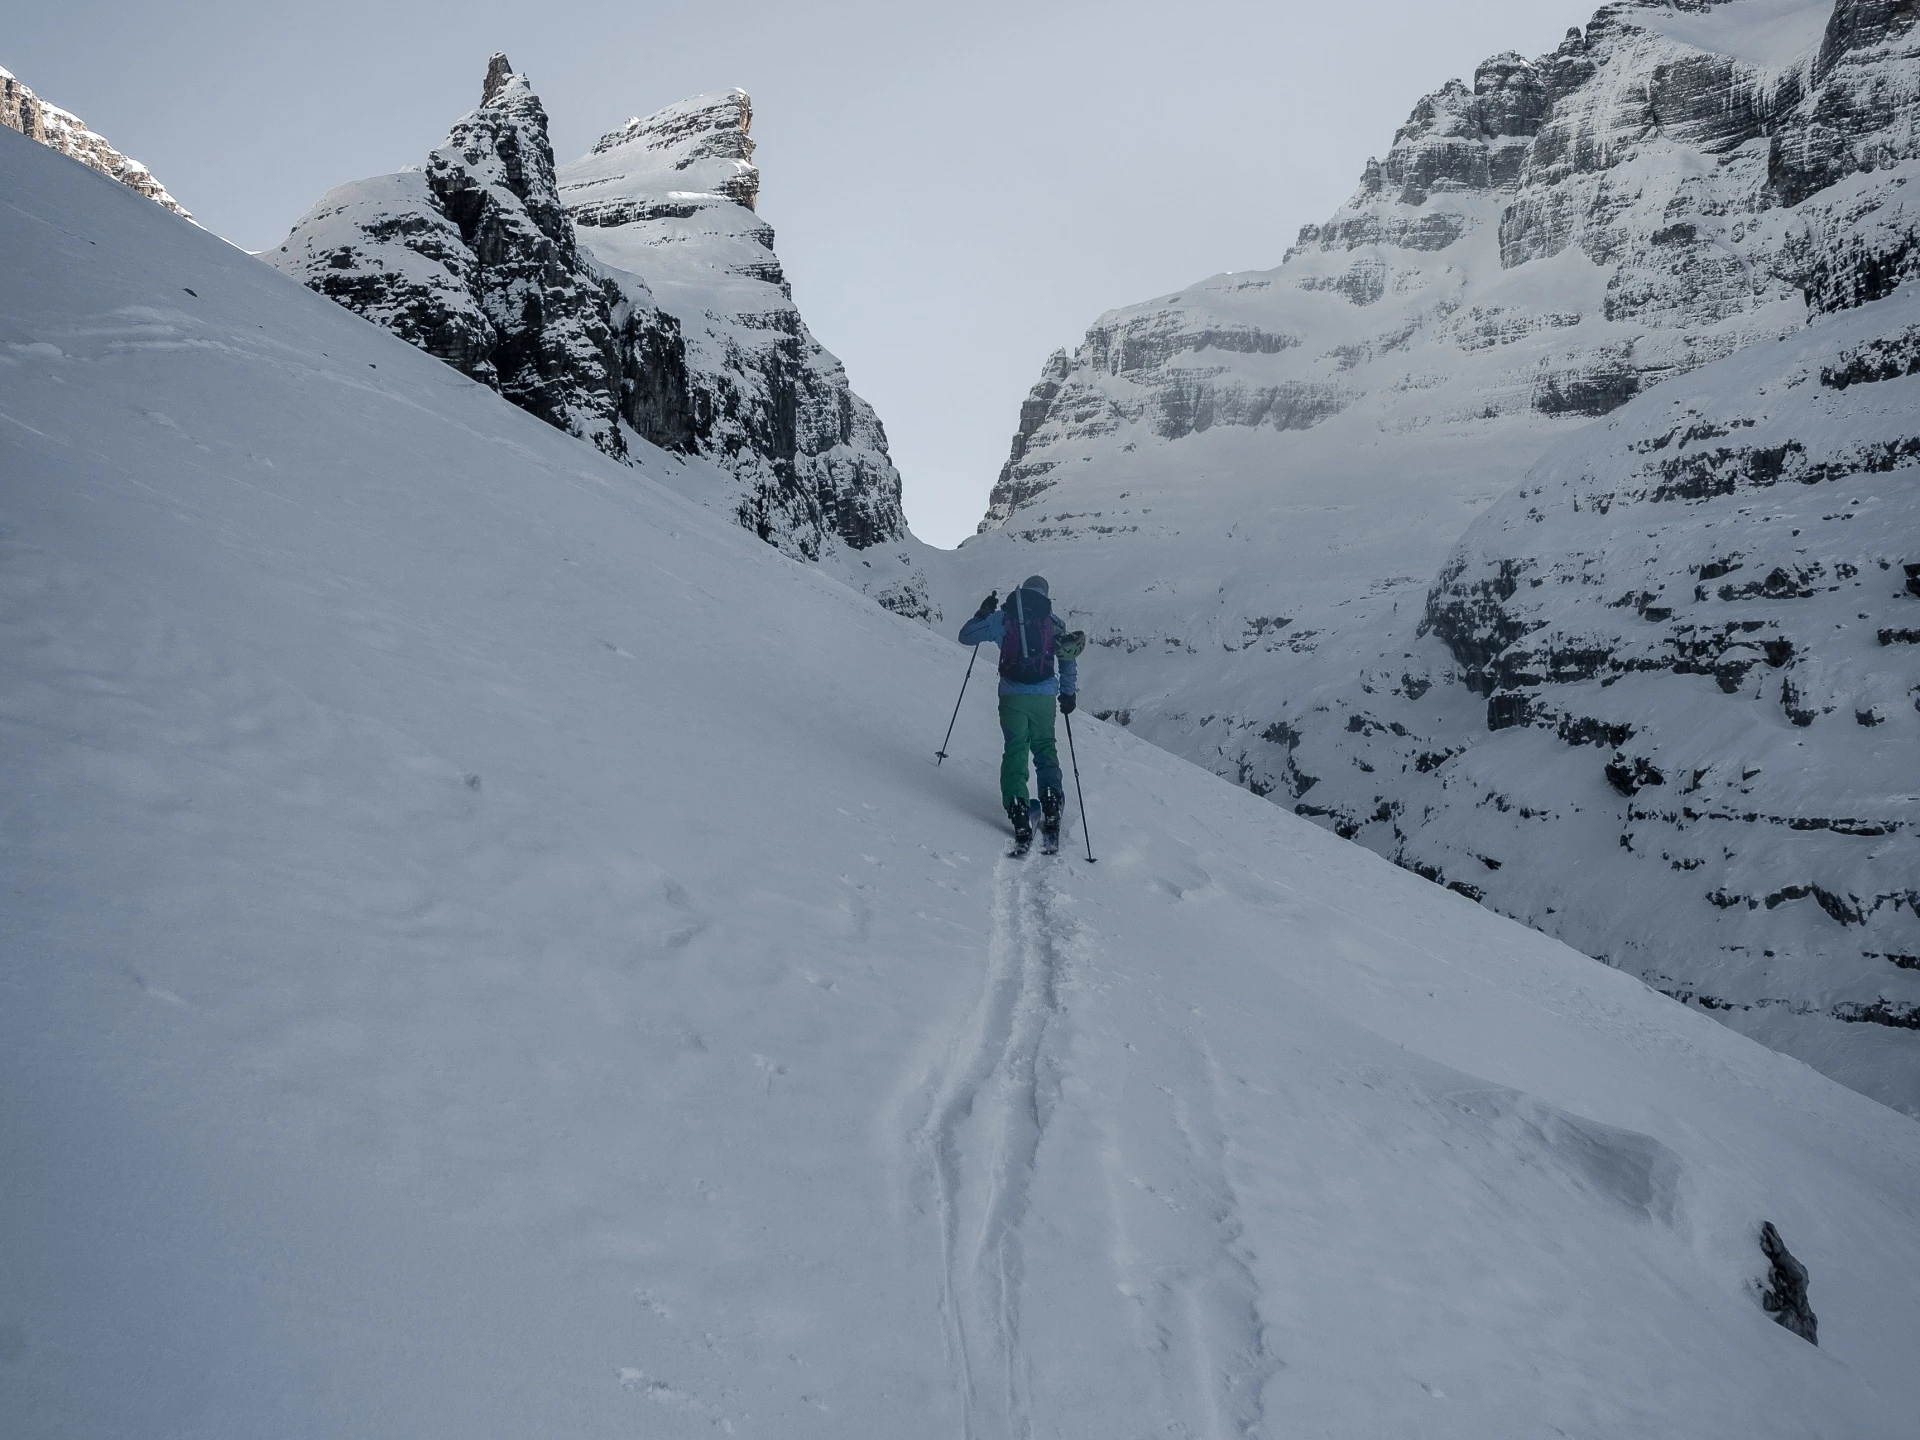 Full-day ski mountaineering trip in Val di Sole